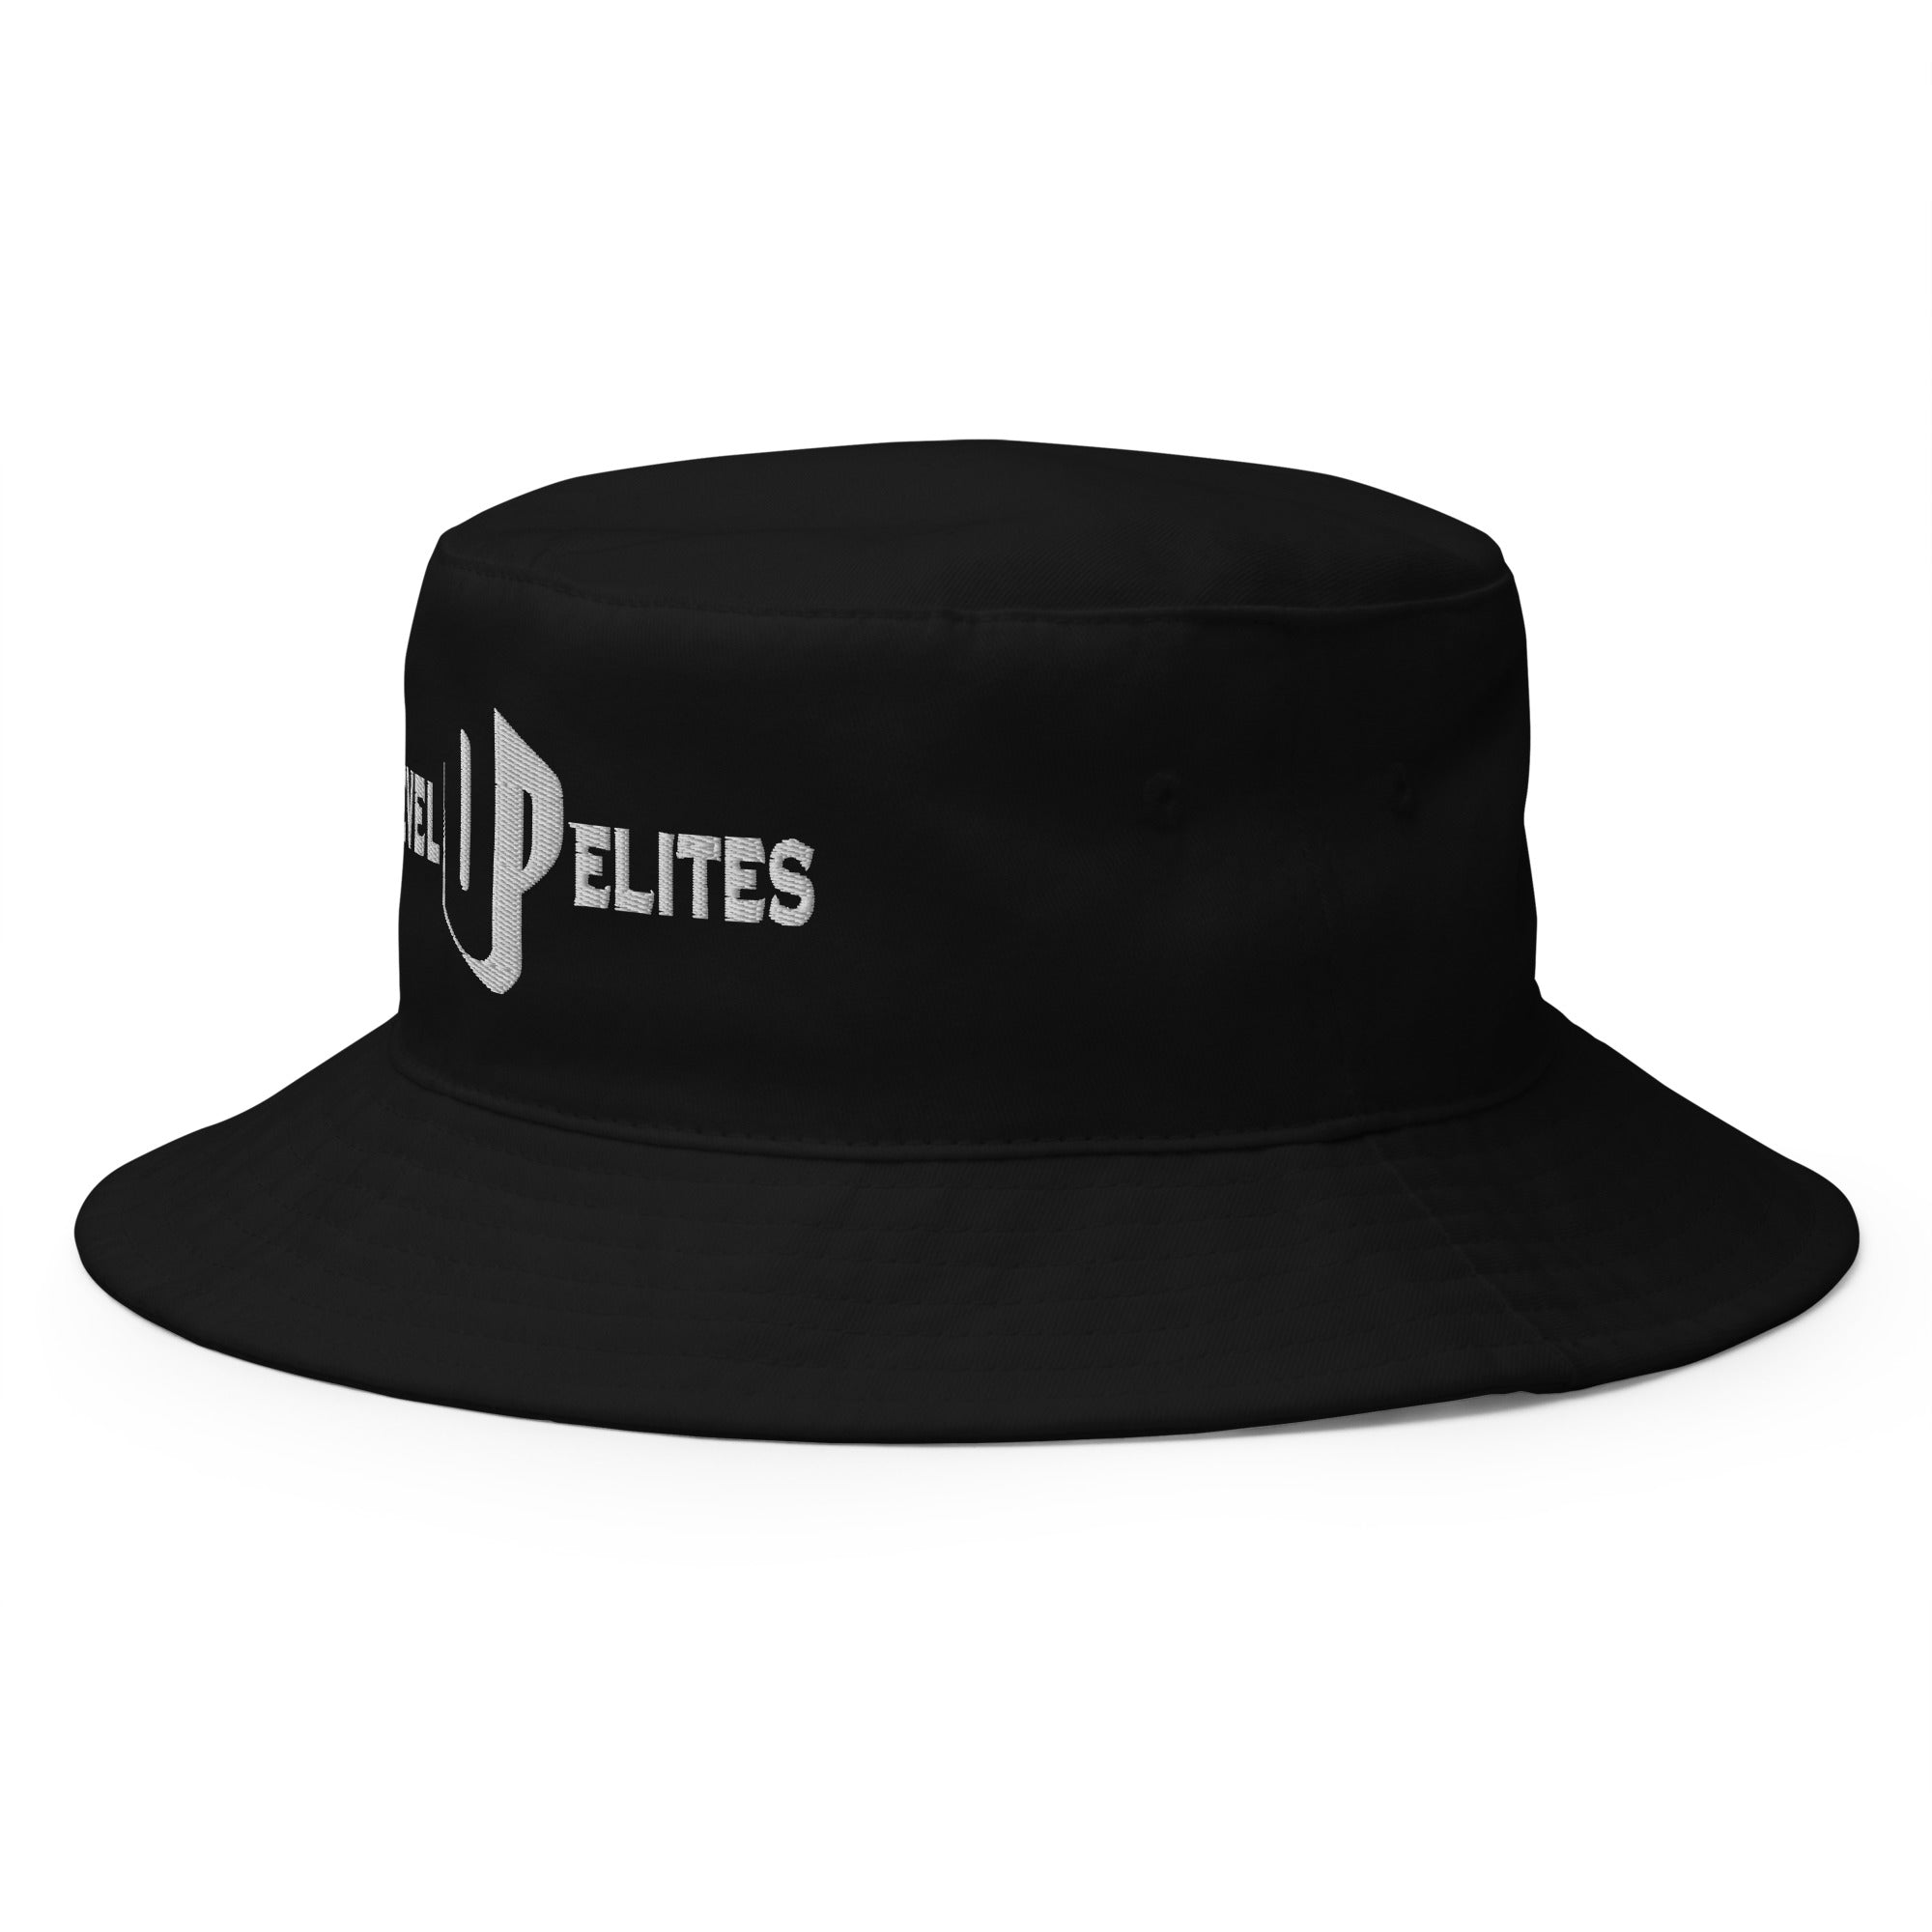 Level Up Elites Bucket Hat